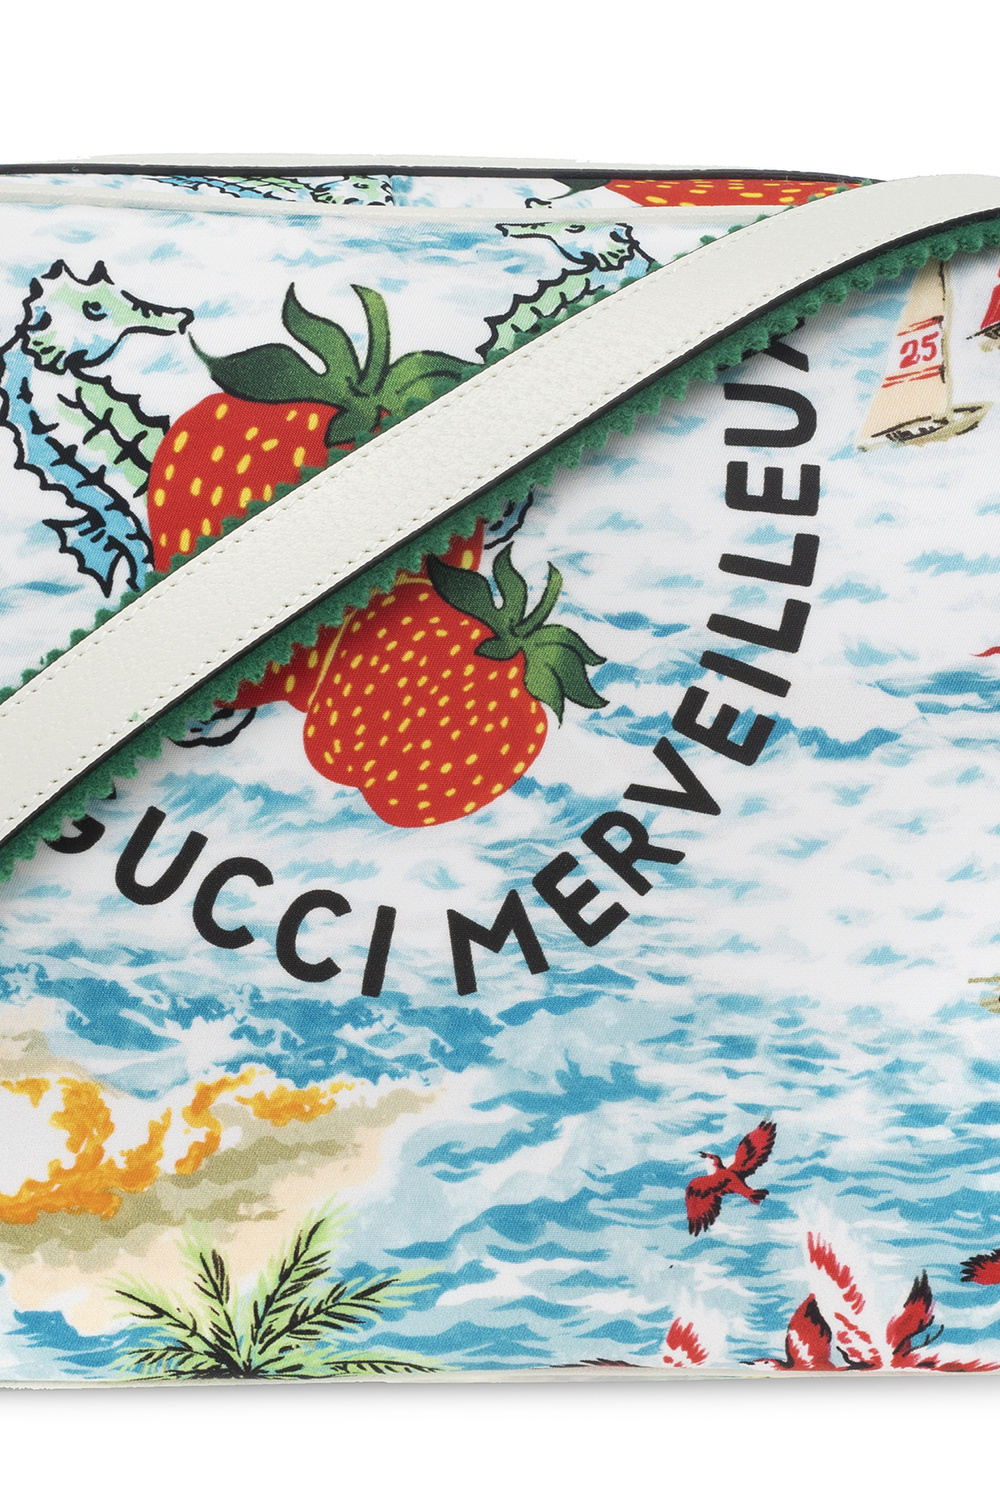 Gucci Kids Bag with ‘Gucci Merveilleux’ print